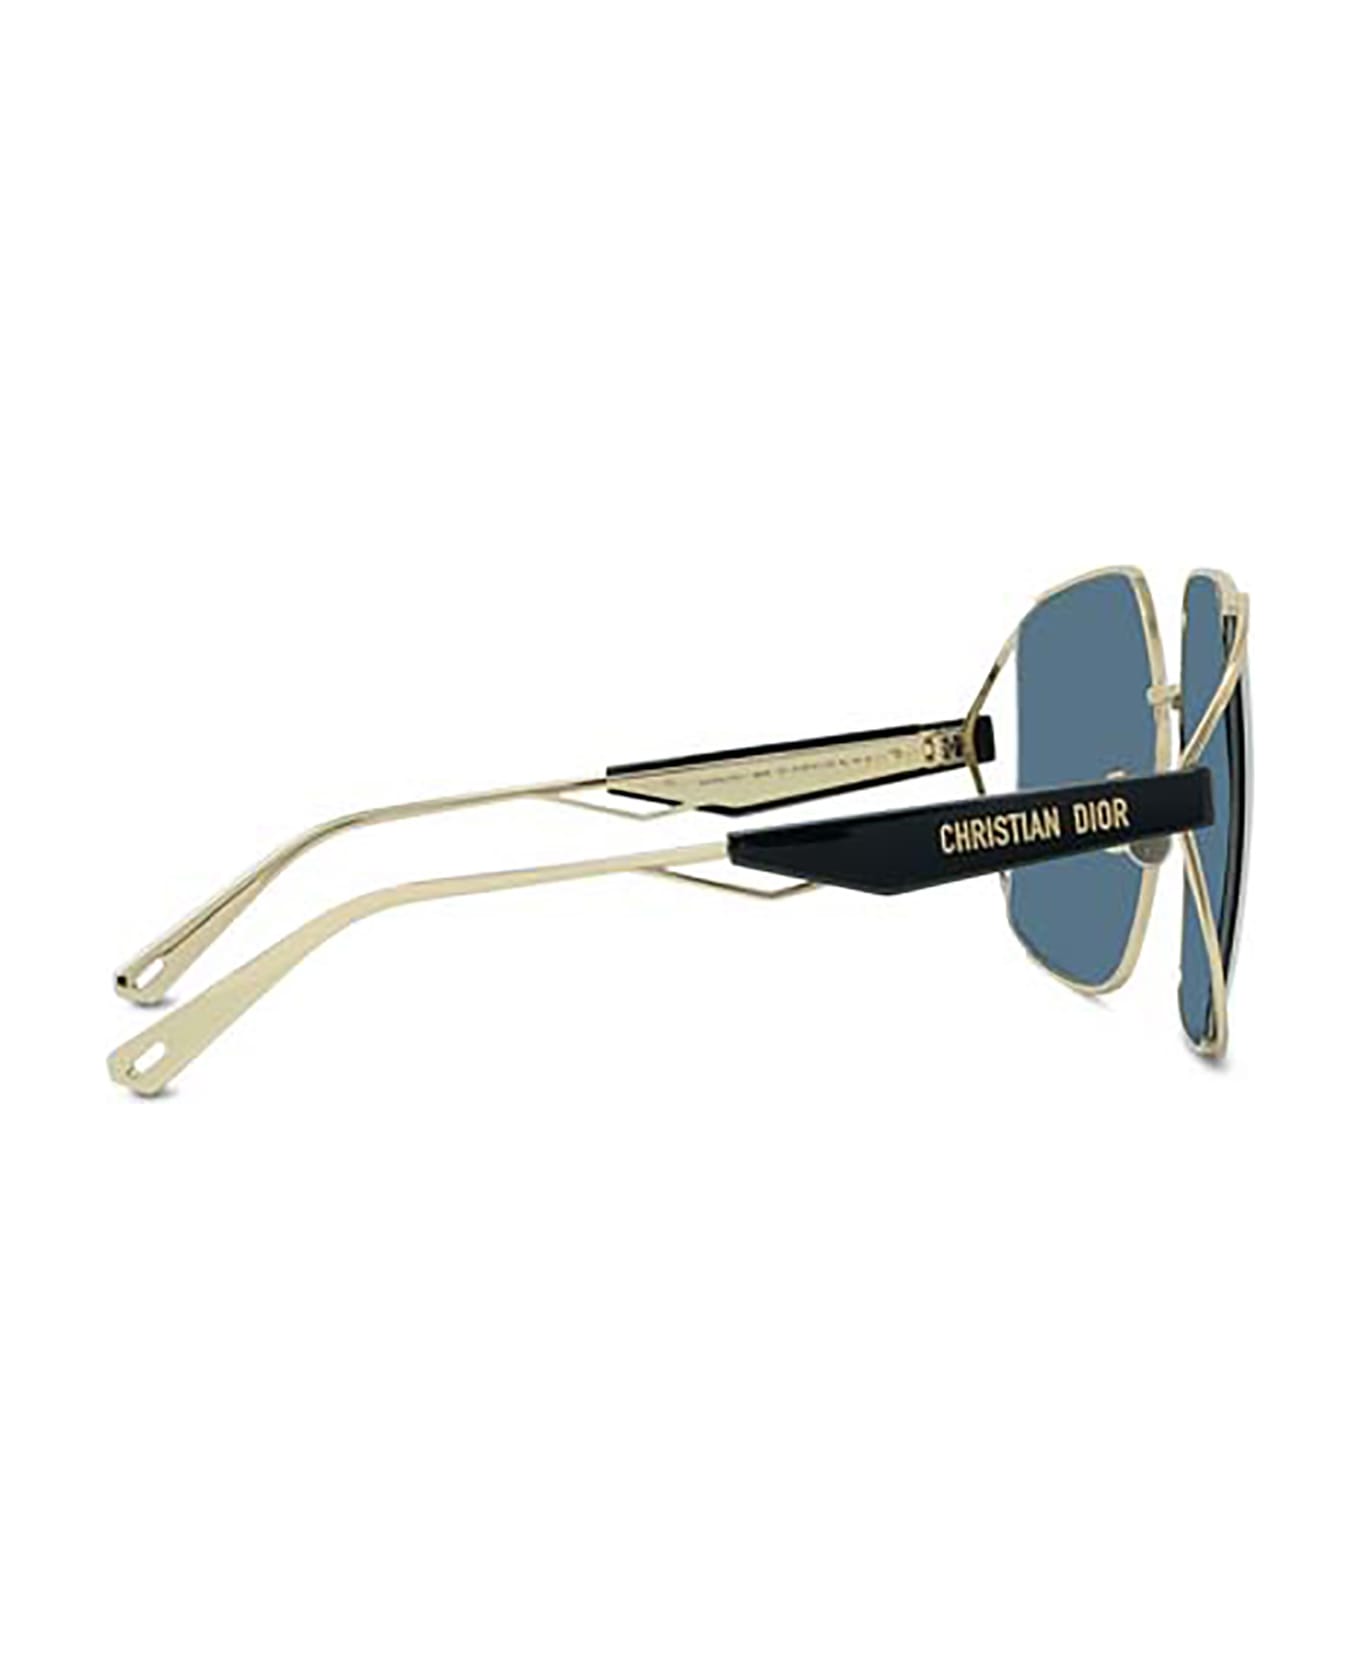 Dior Eyewear ARCHIDIOR S1U Jeepers Sunglasses